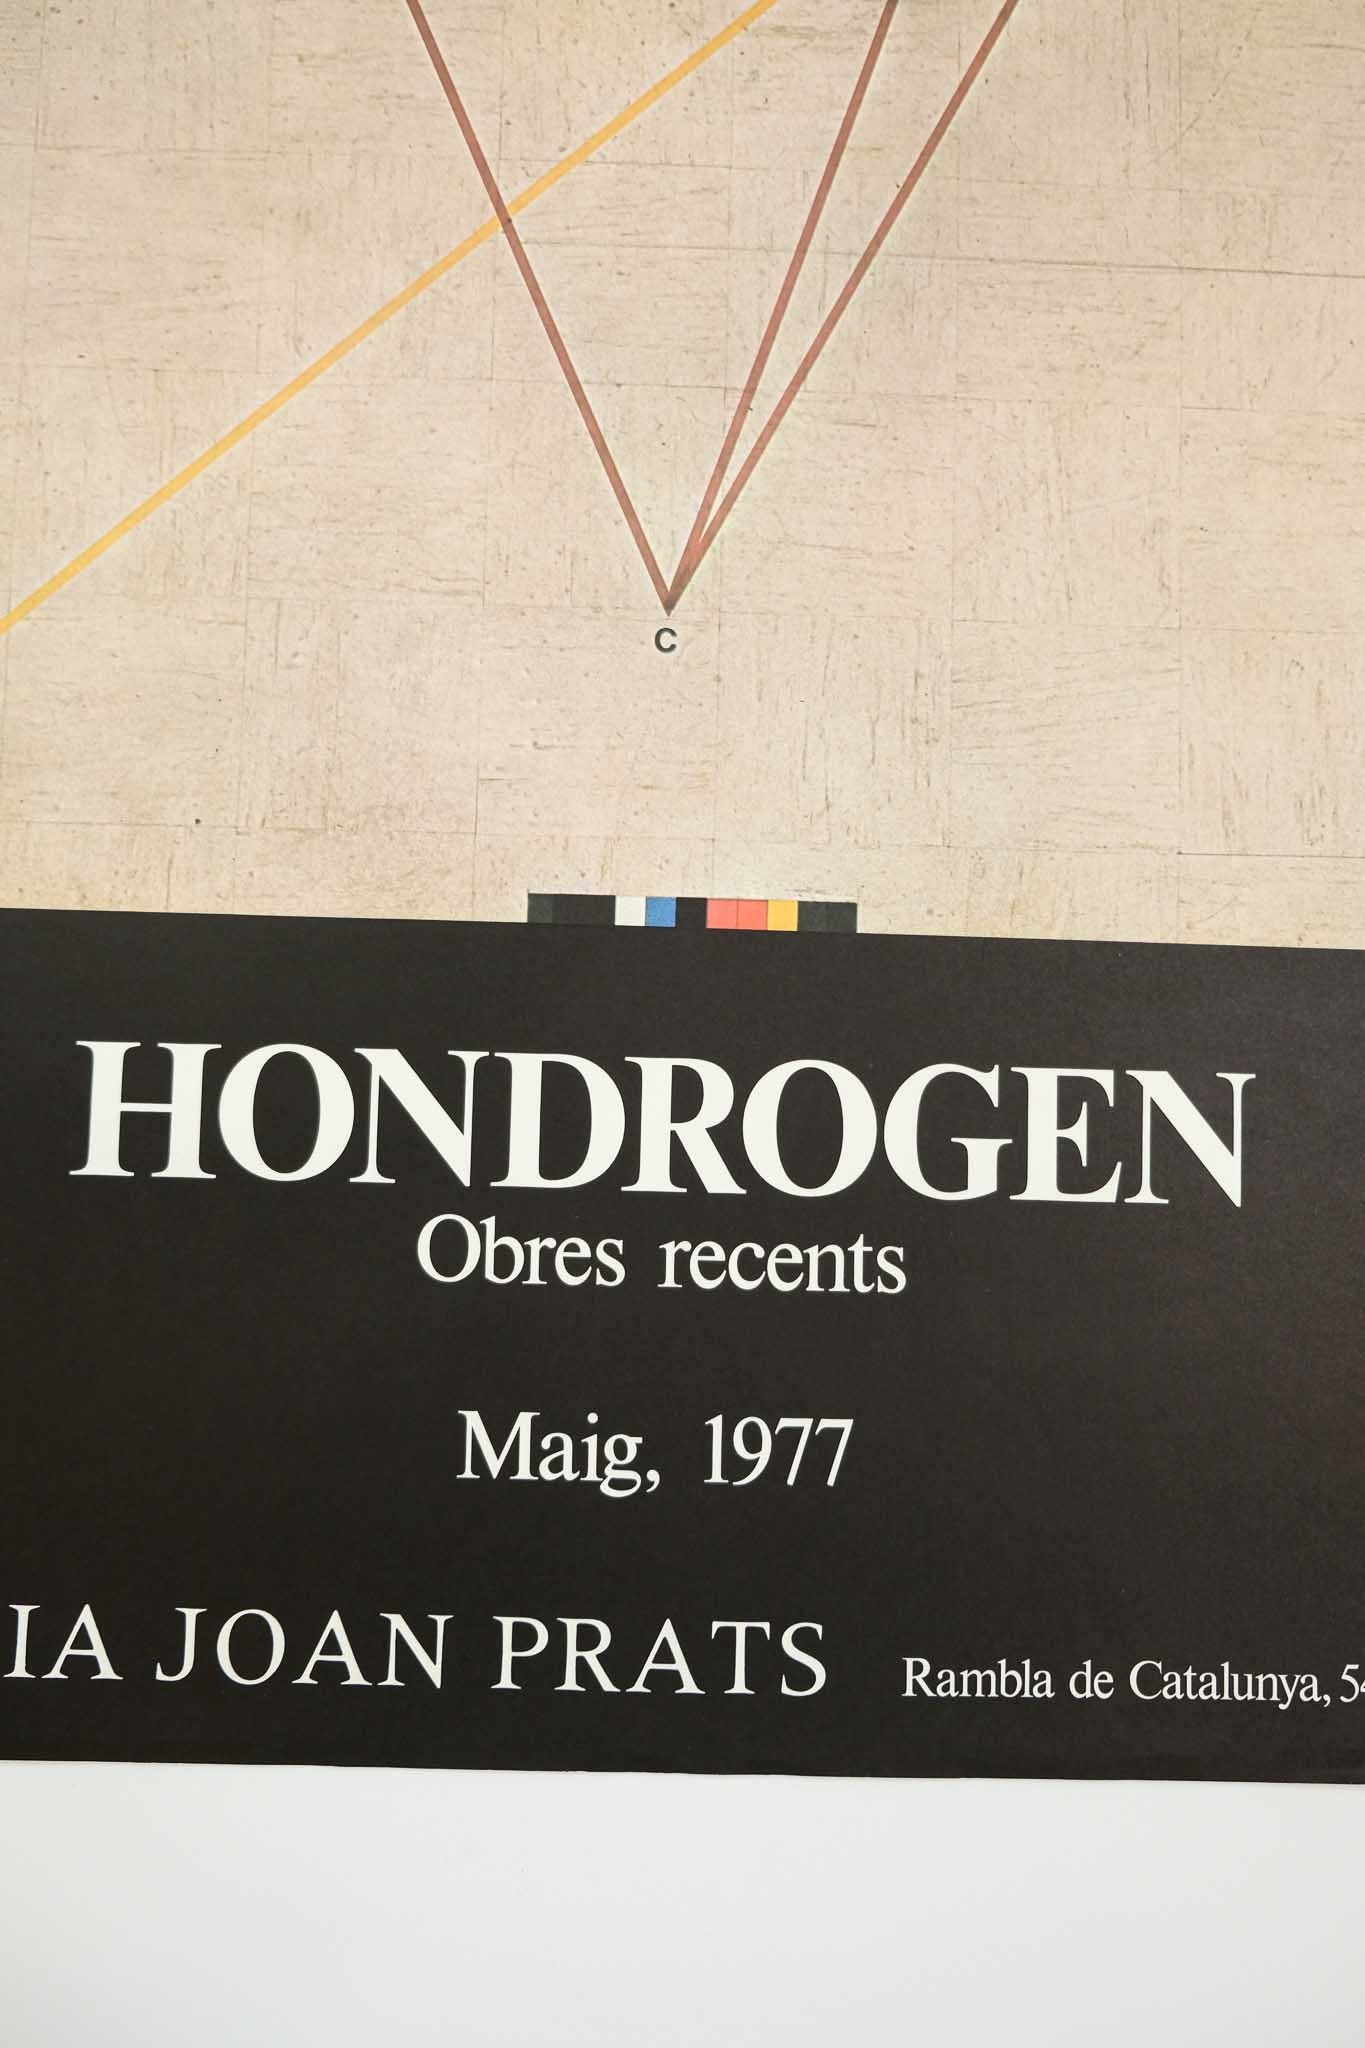 Nicholas Hondrogen 1977 Galeria Joan Prats Print